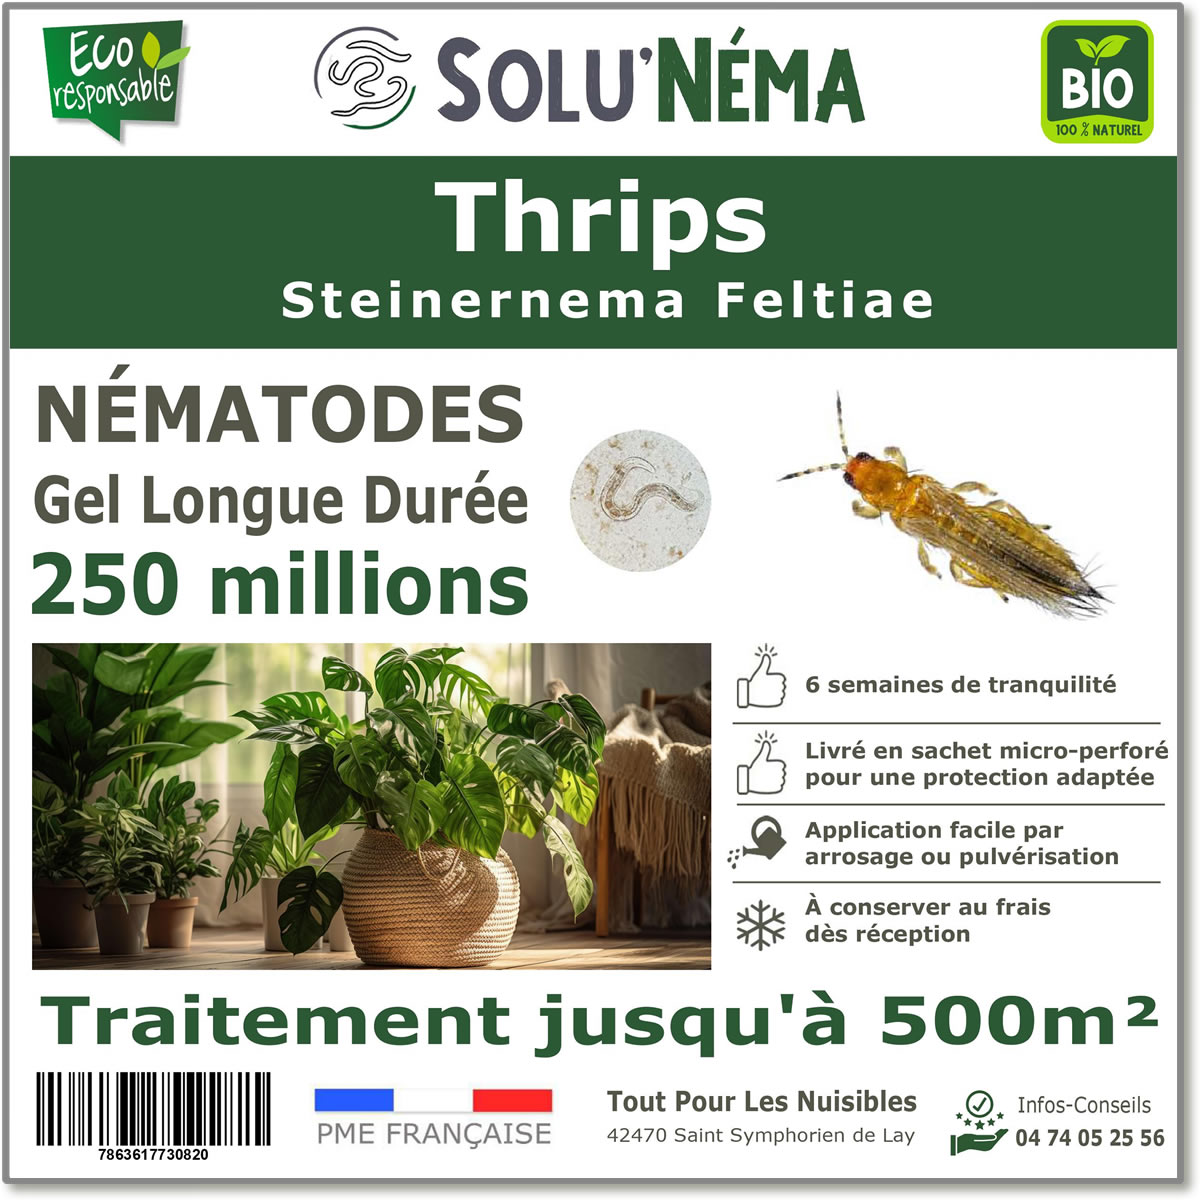 Nematodes (SF) Solunema for Thrips 250 million SF